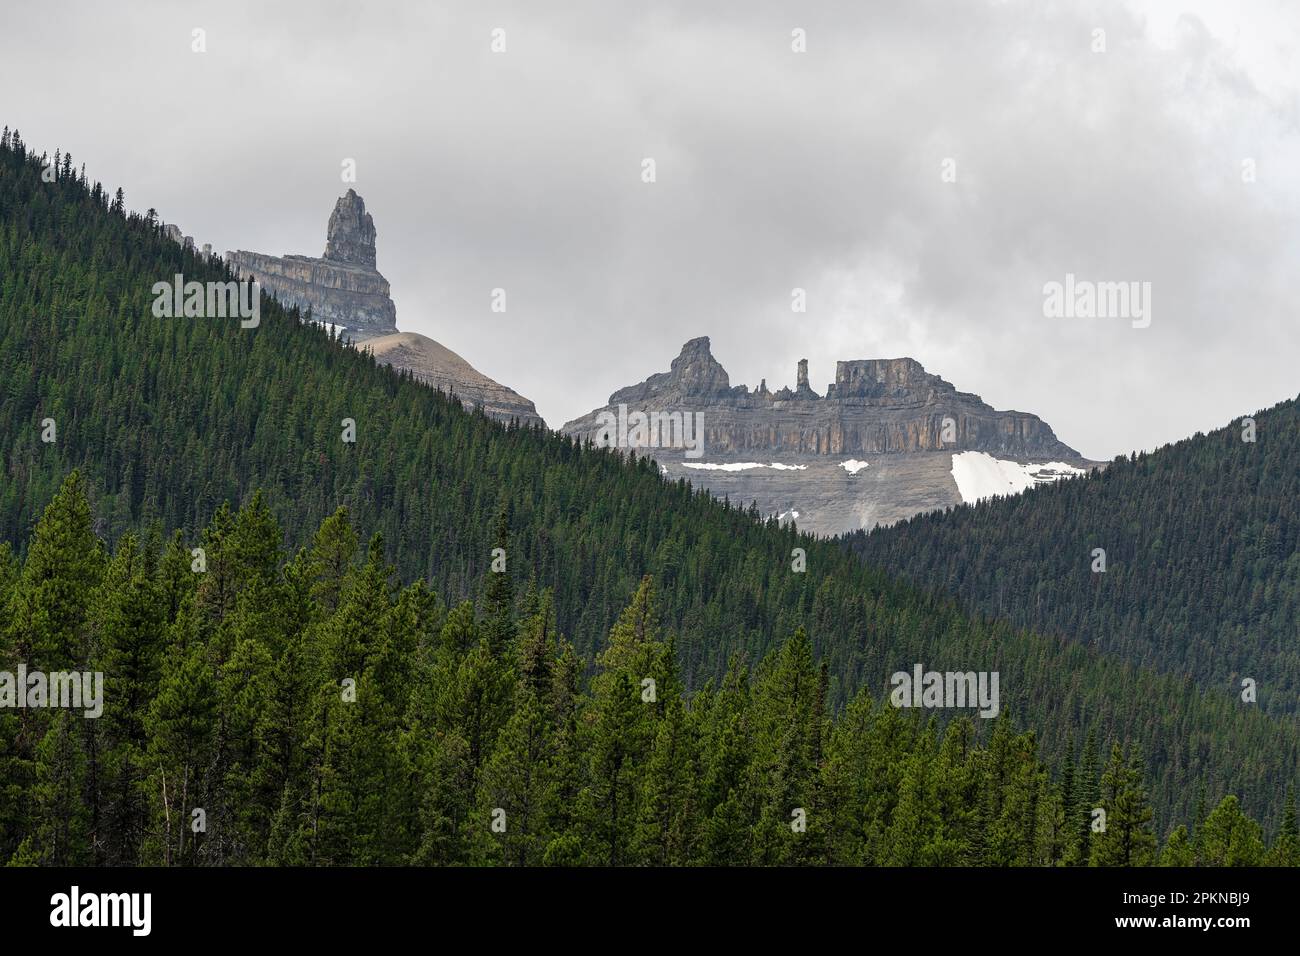 Mount Saskatchewan und Cleopatra's Needle am Icefields Parkway, Banff National Park, Kanada. Stockfoto